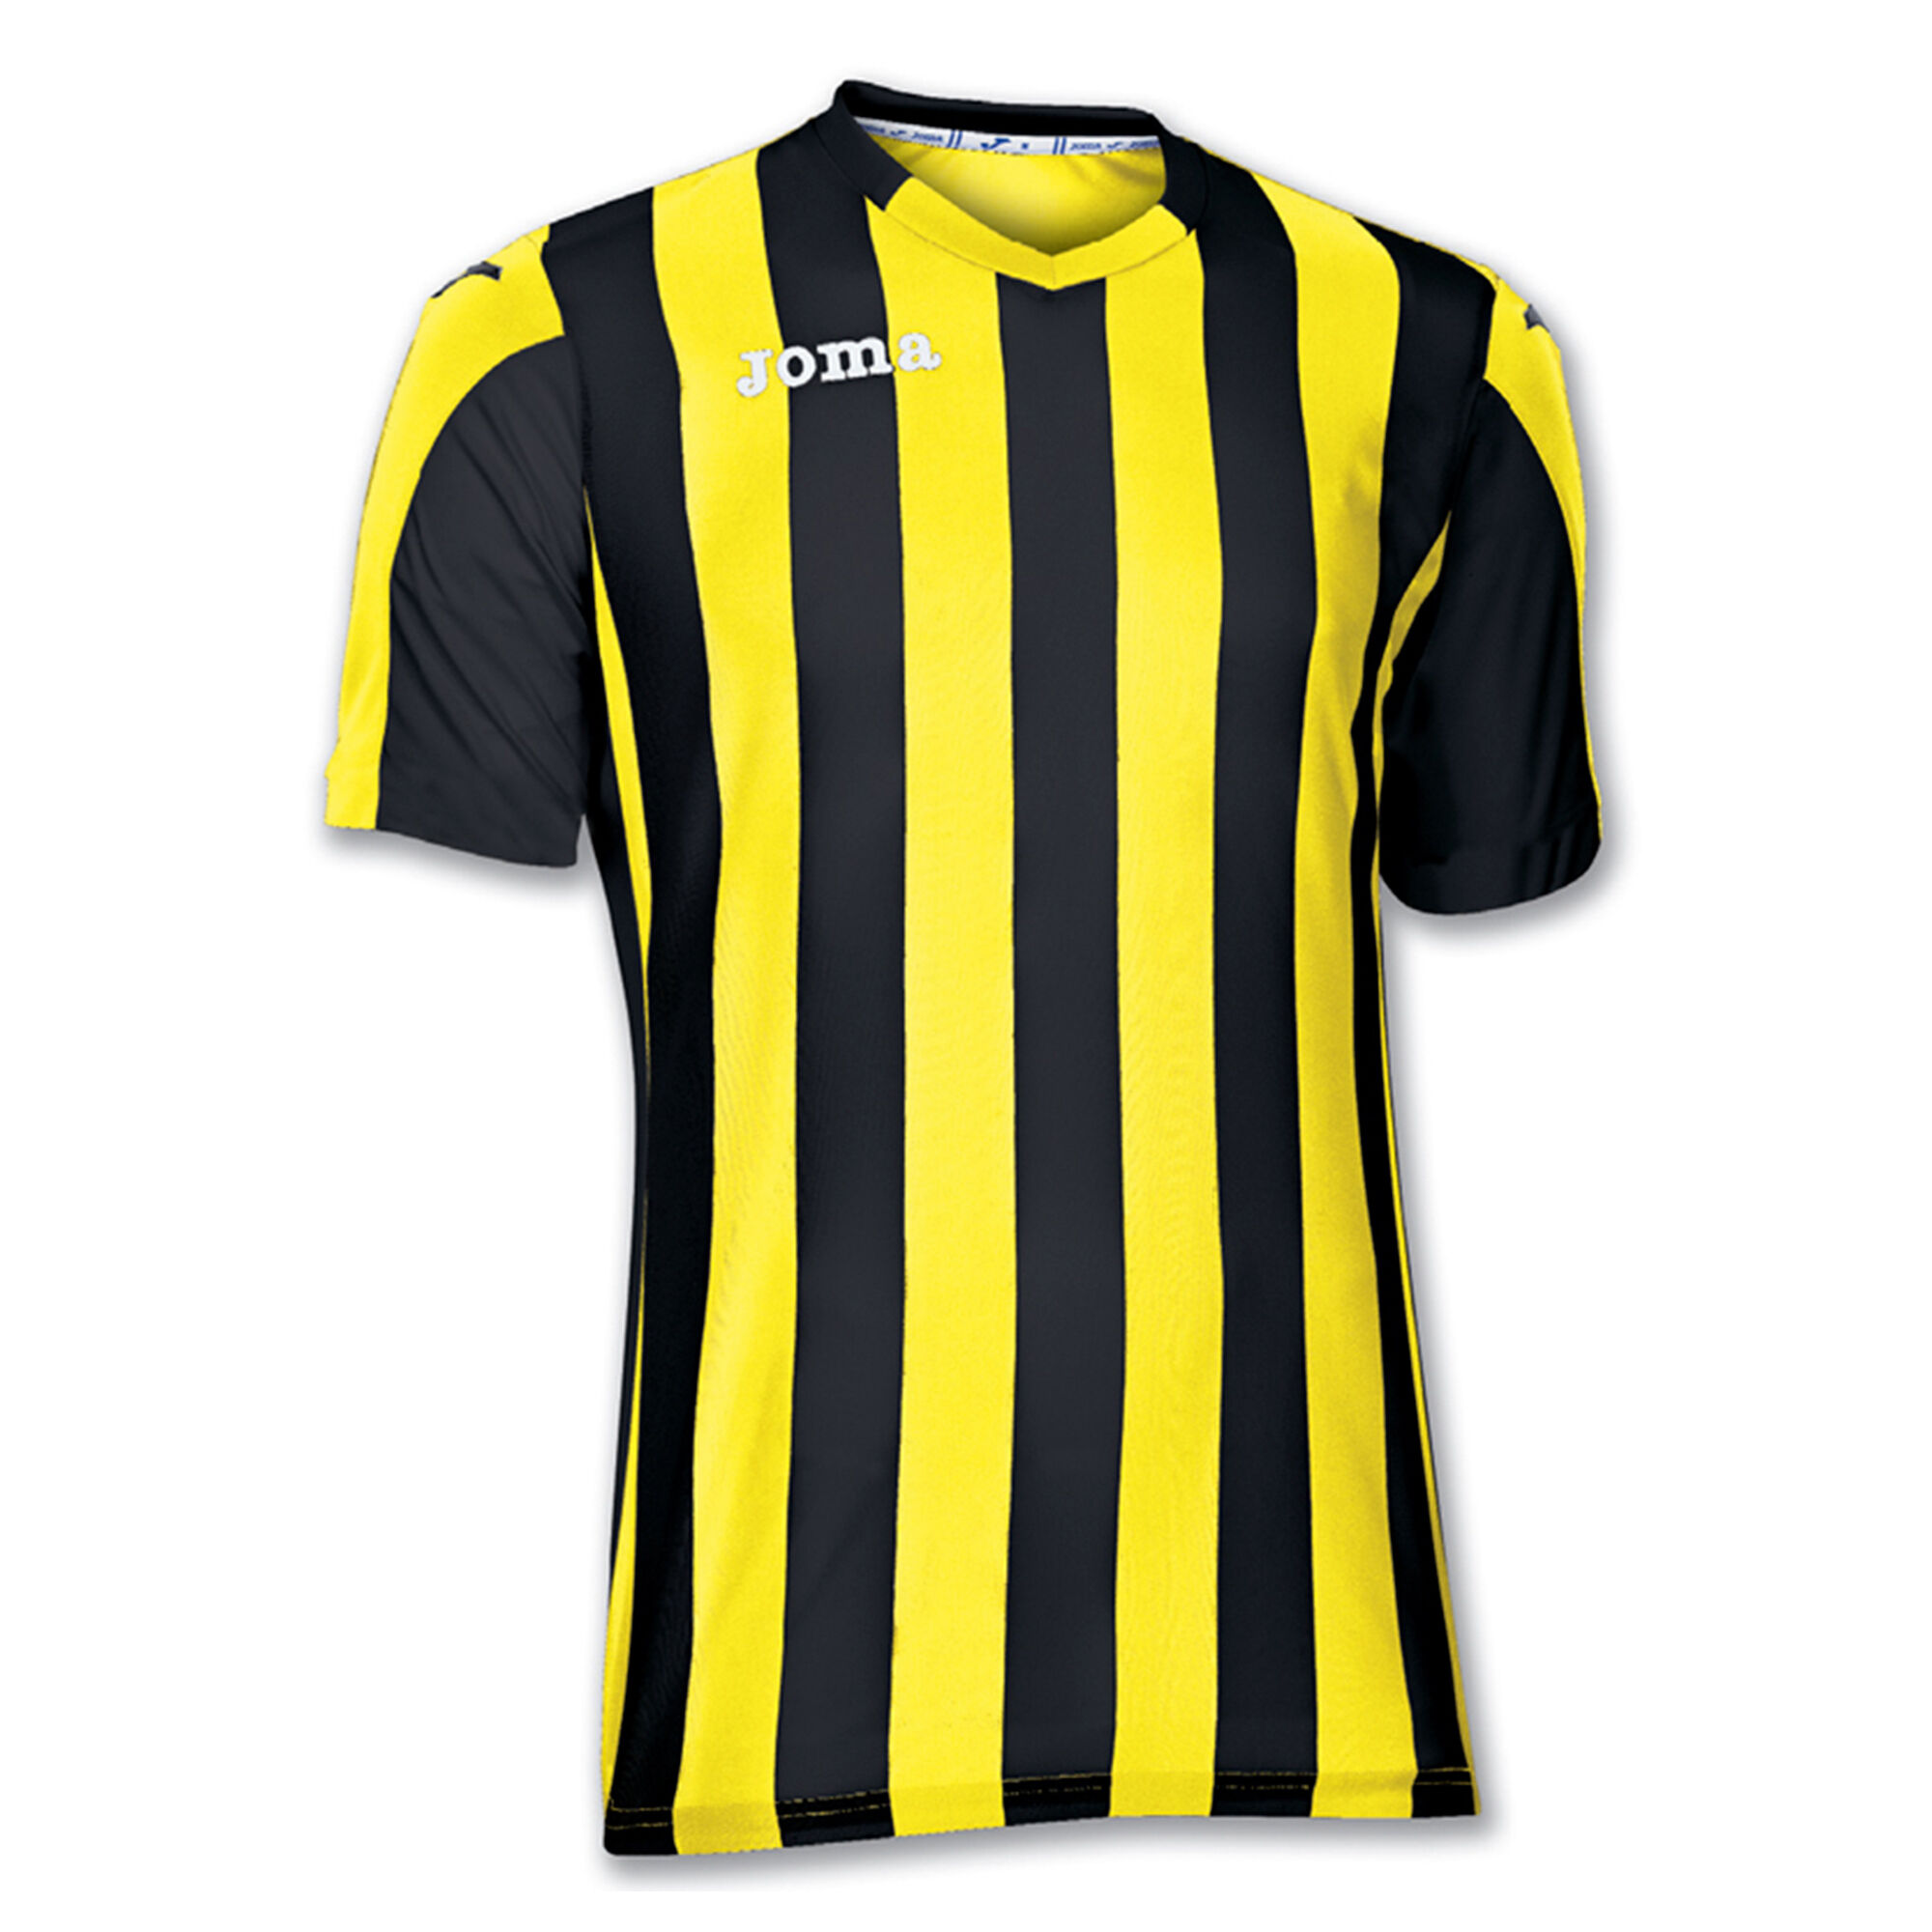 Camiseta manga corta hombre Copa amarillo negro